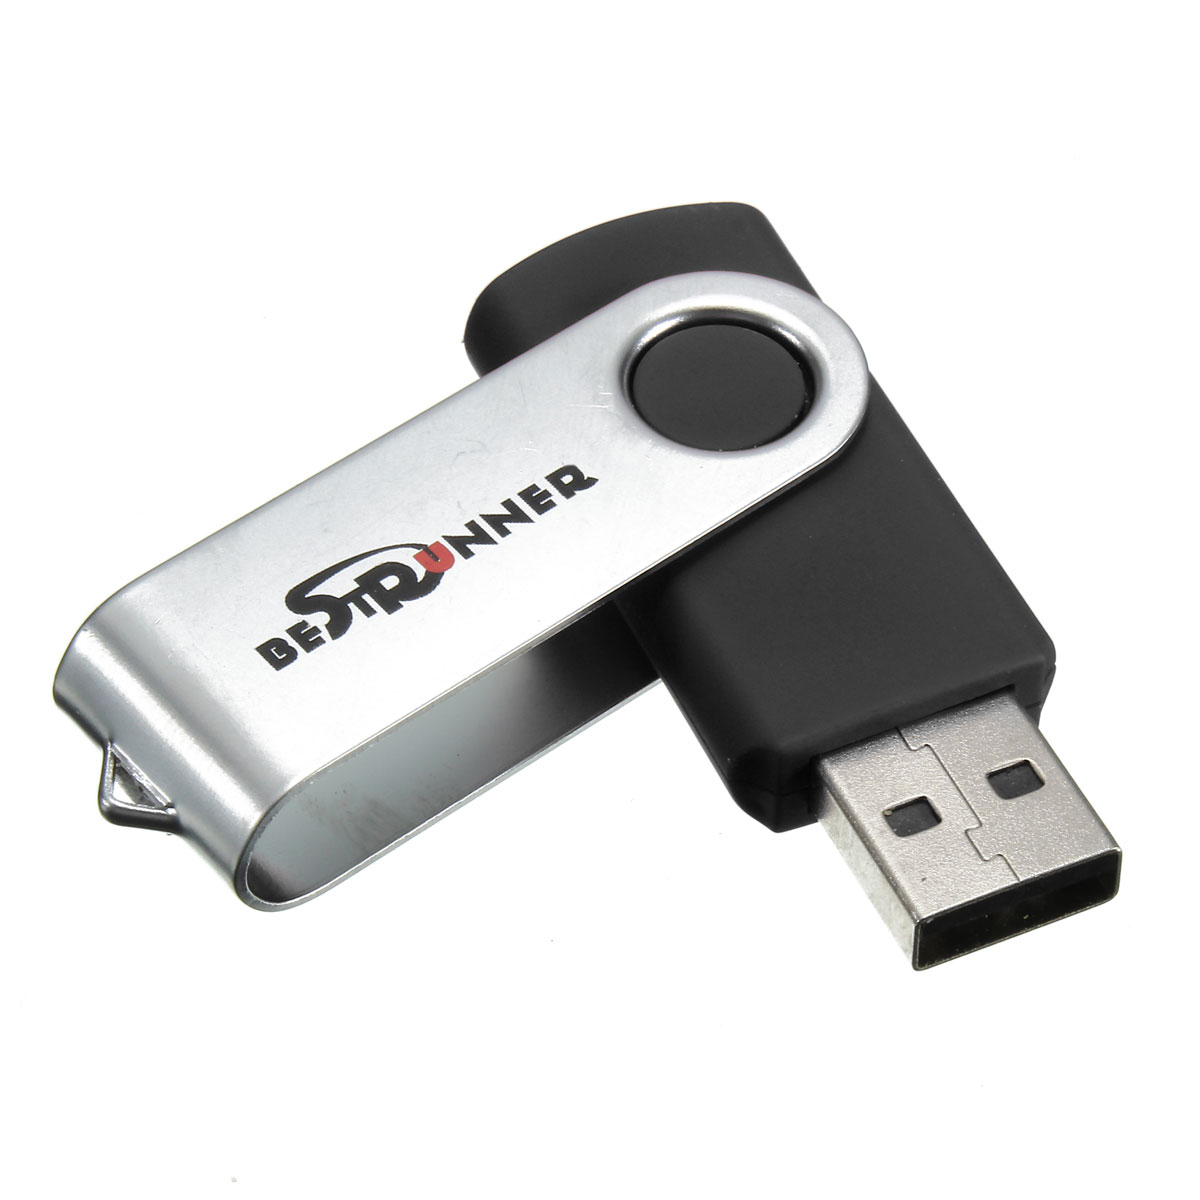 Bestrunner 8GB Foldable USB 2.0 Flash Drive Thumbstick Pen Drive Memory U Disk 27